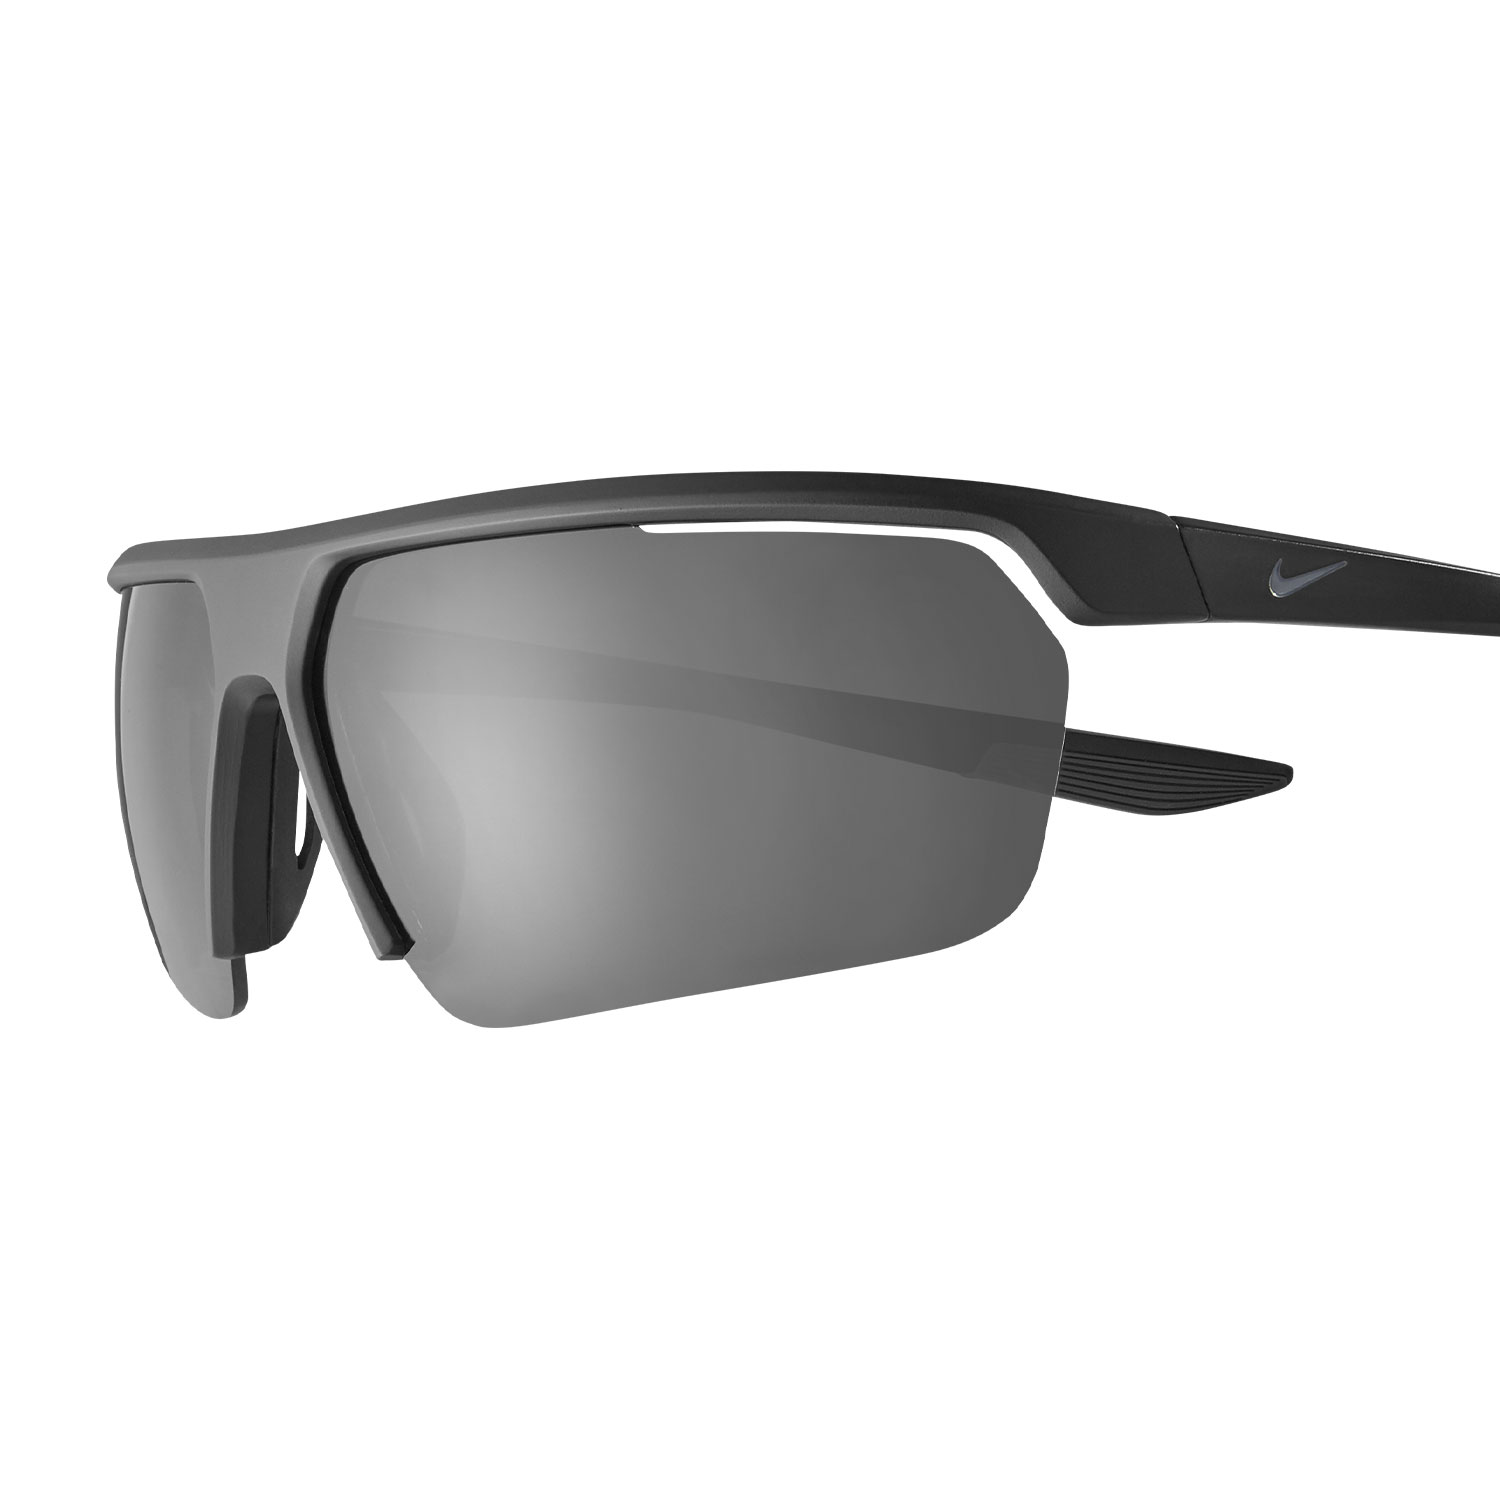 Nike Gale Force Sunglasses - Matte Black/Cool Grey W/Dark Grey Lens